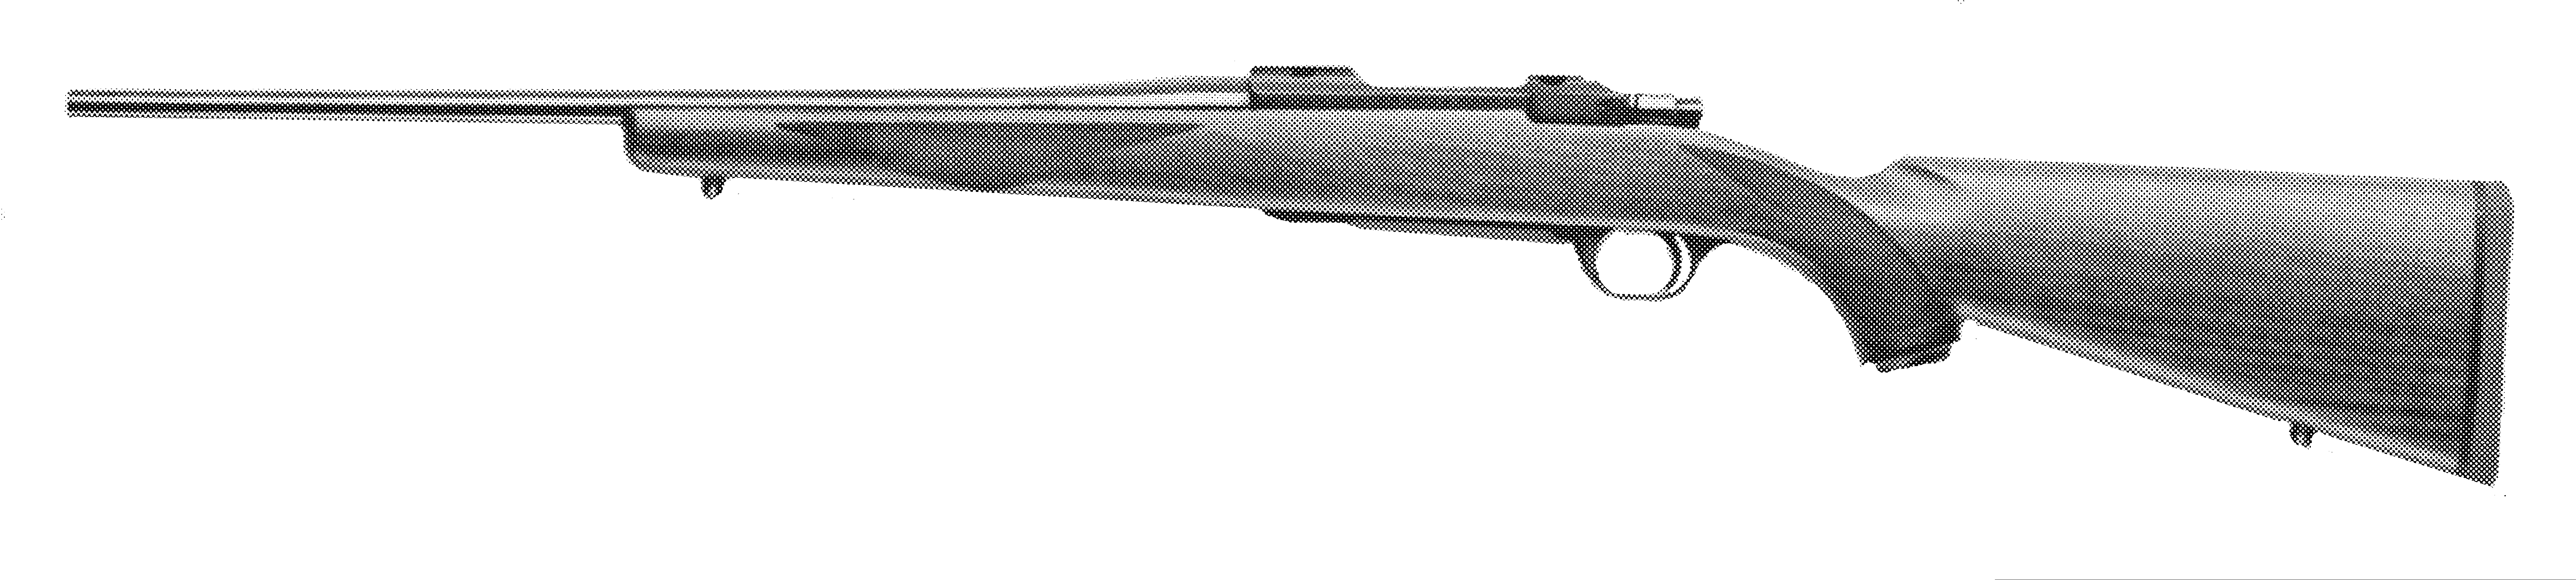 Model 77CR MKII Compact Rifle